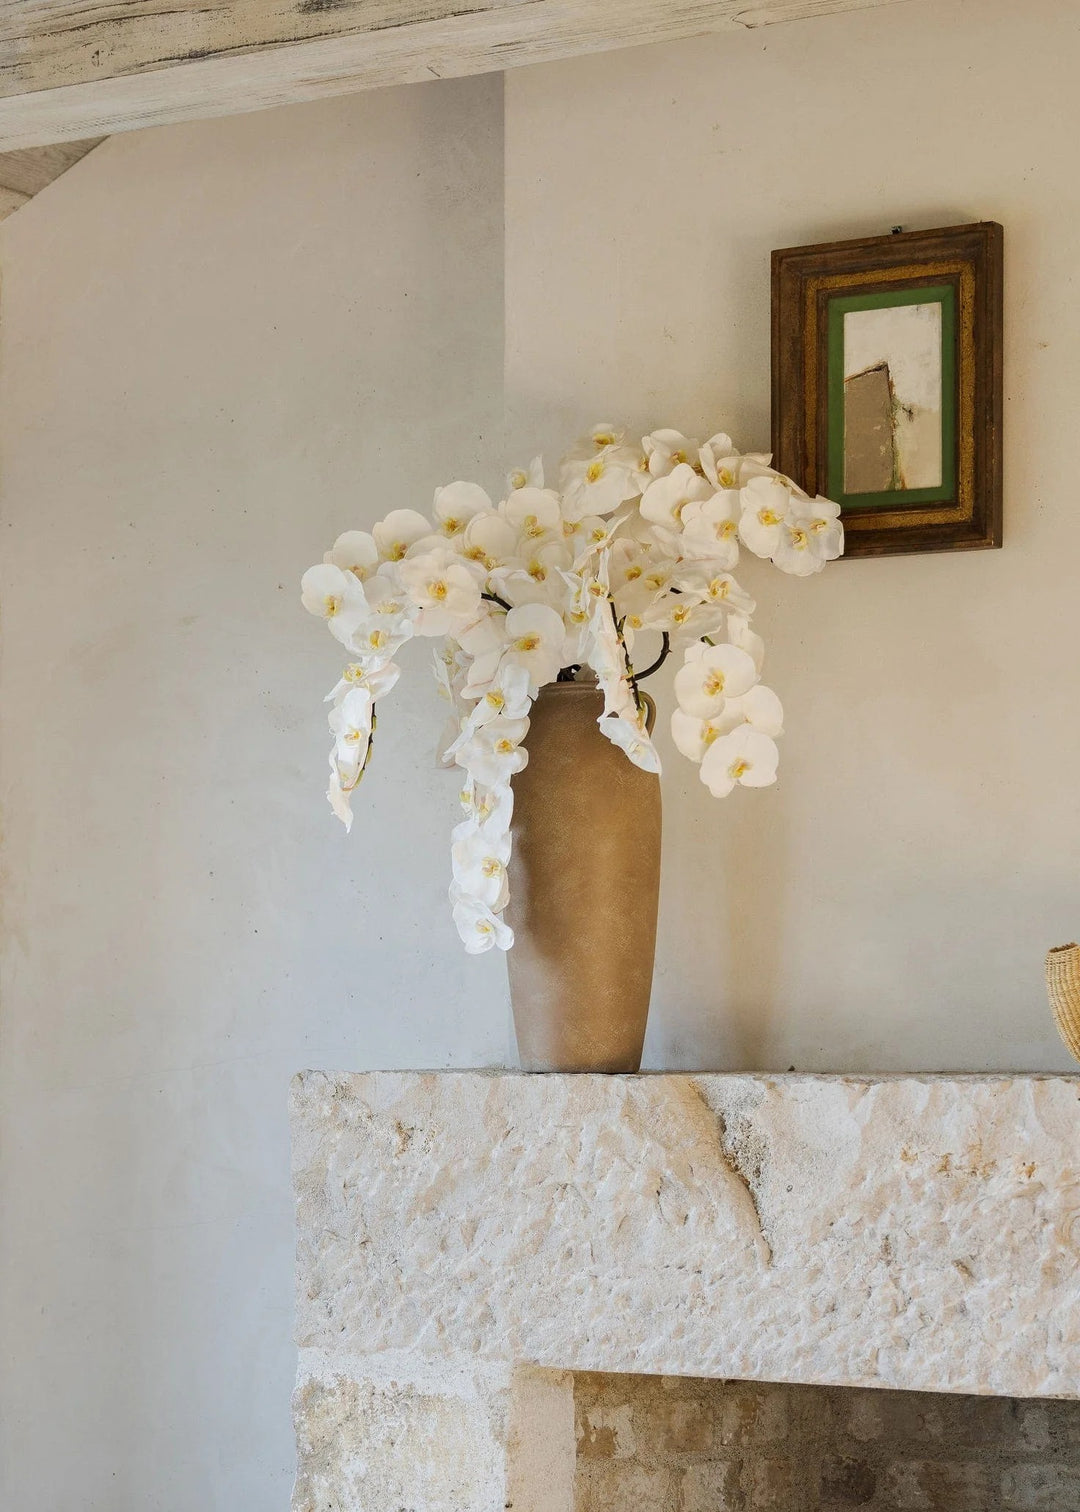 Large White Faux Orchids - 44"